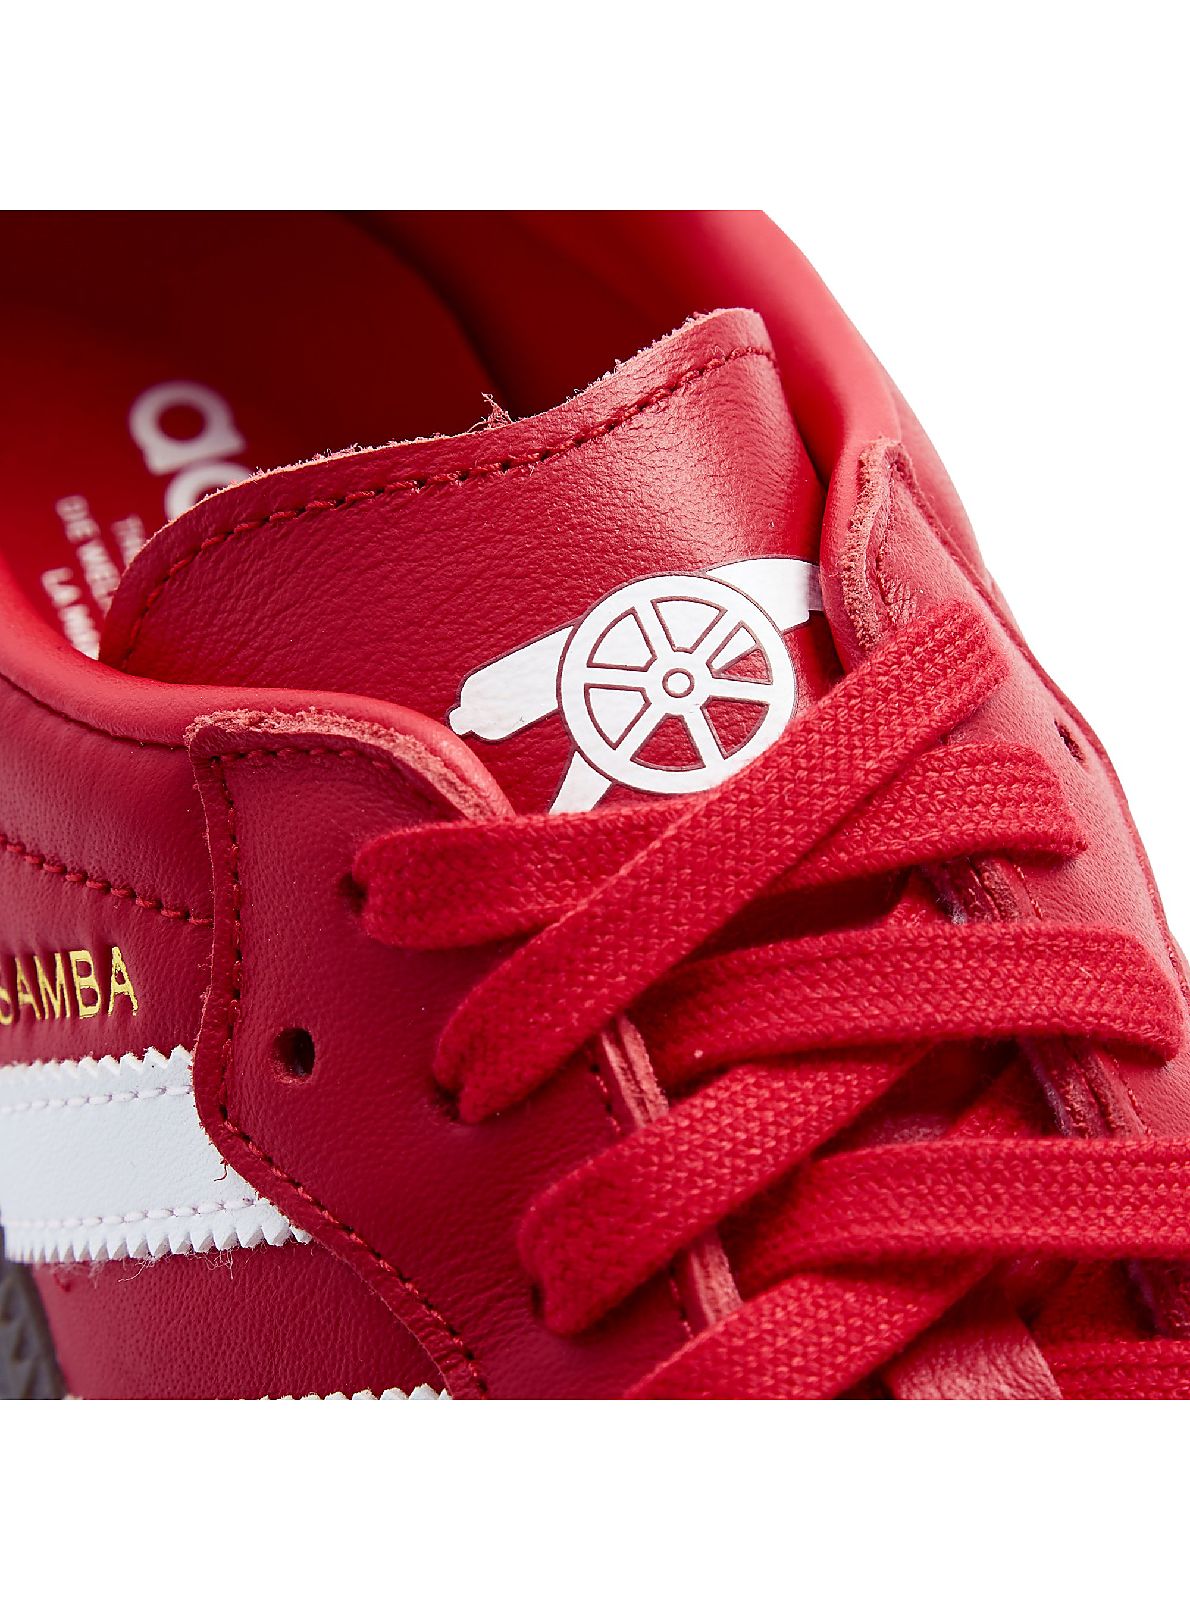 Arsenal Originals Essentials Samba Shoes | Official Online Store